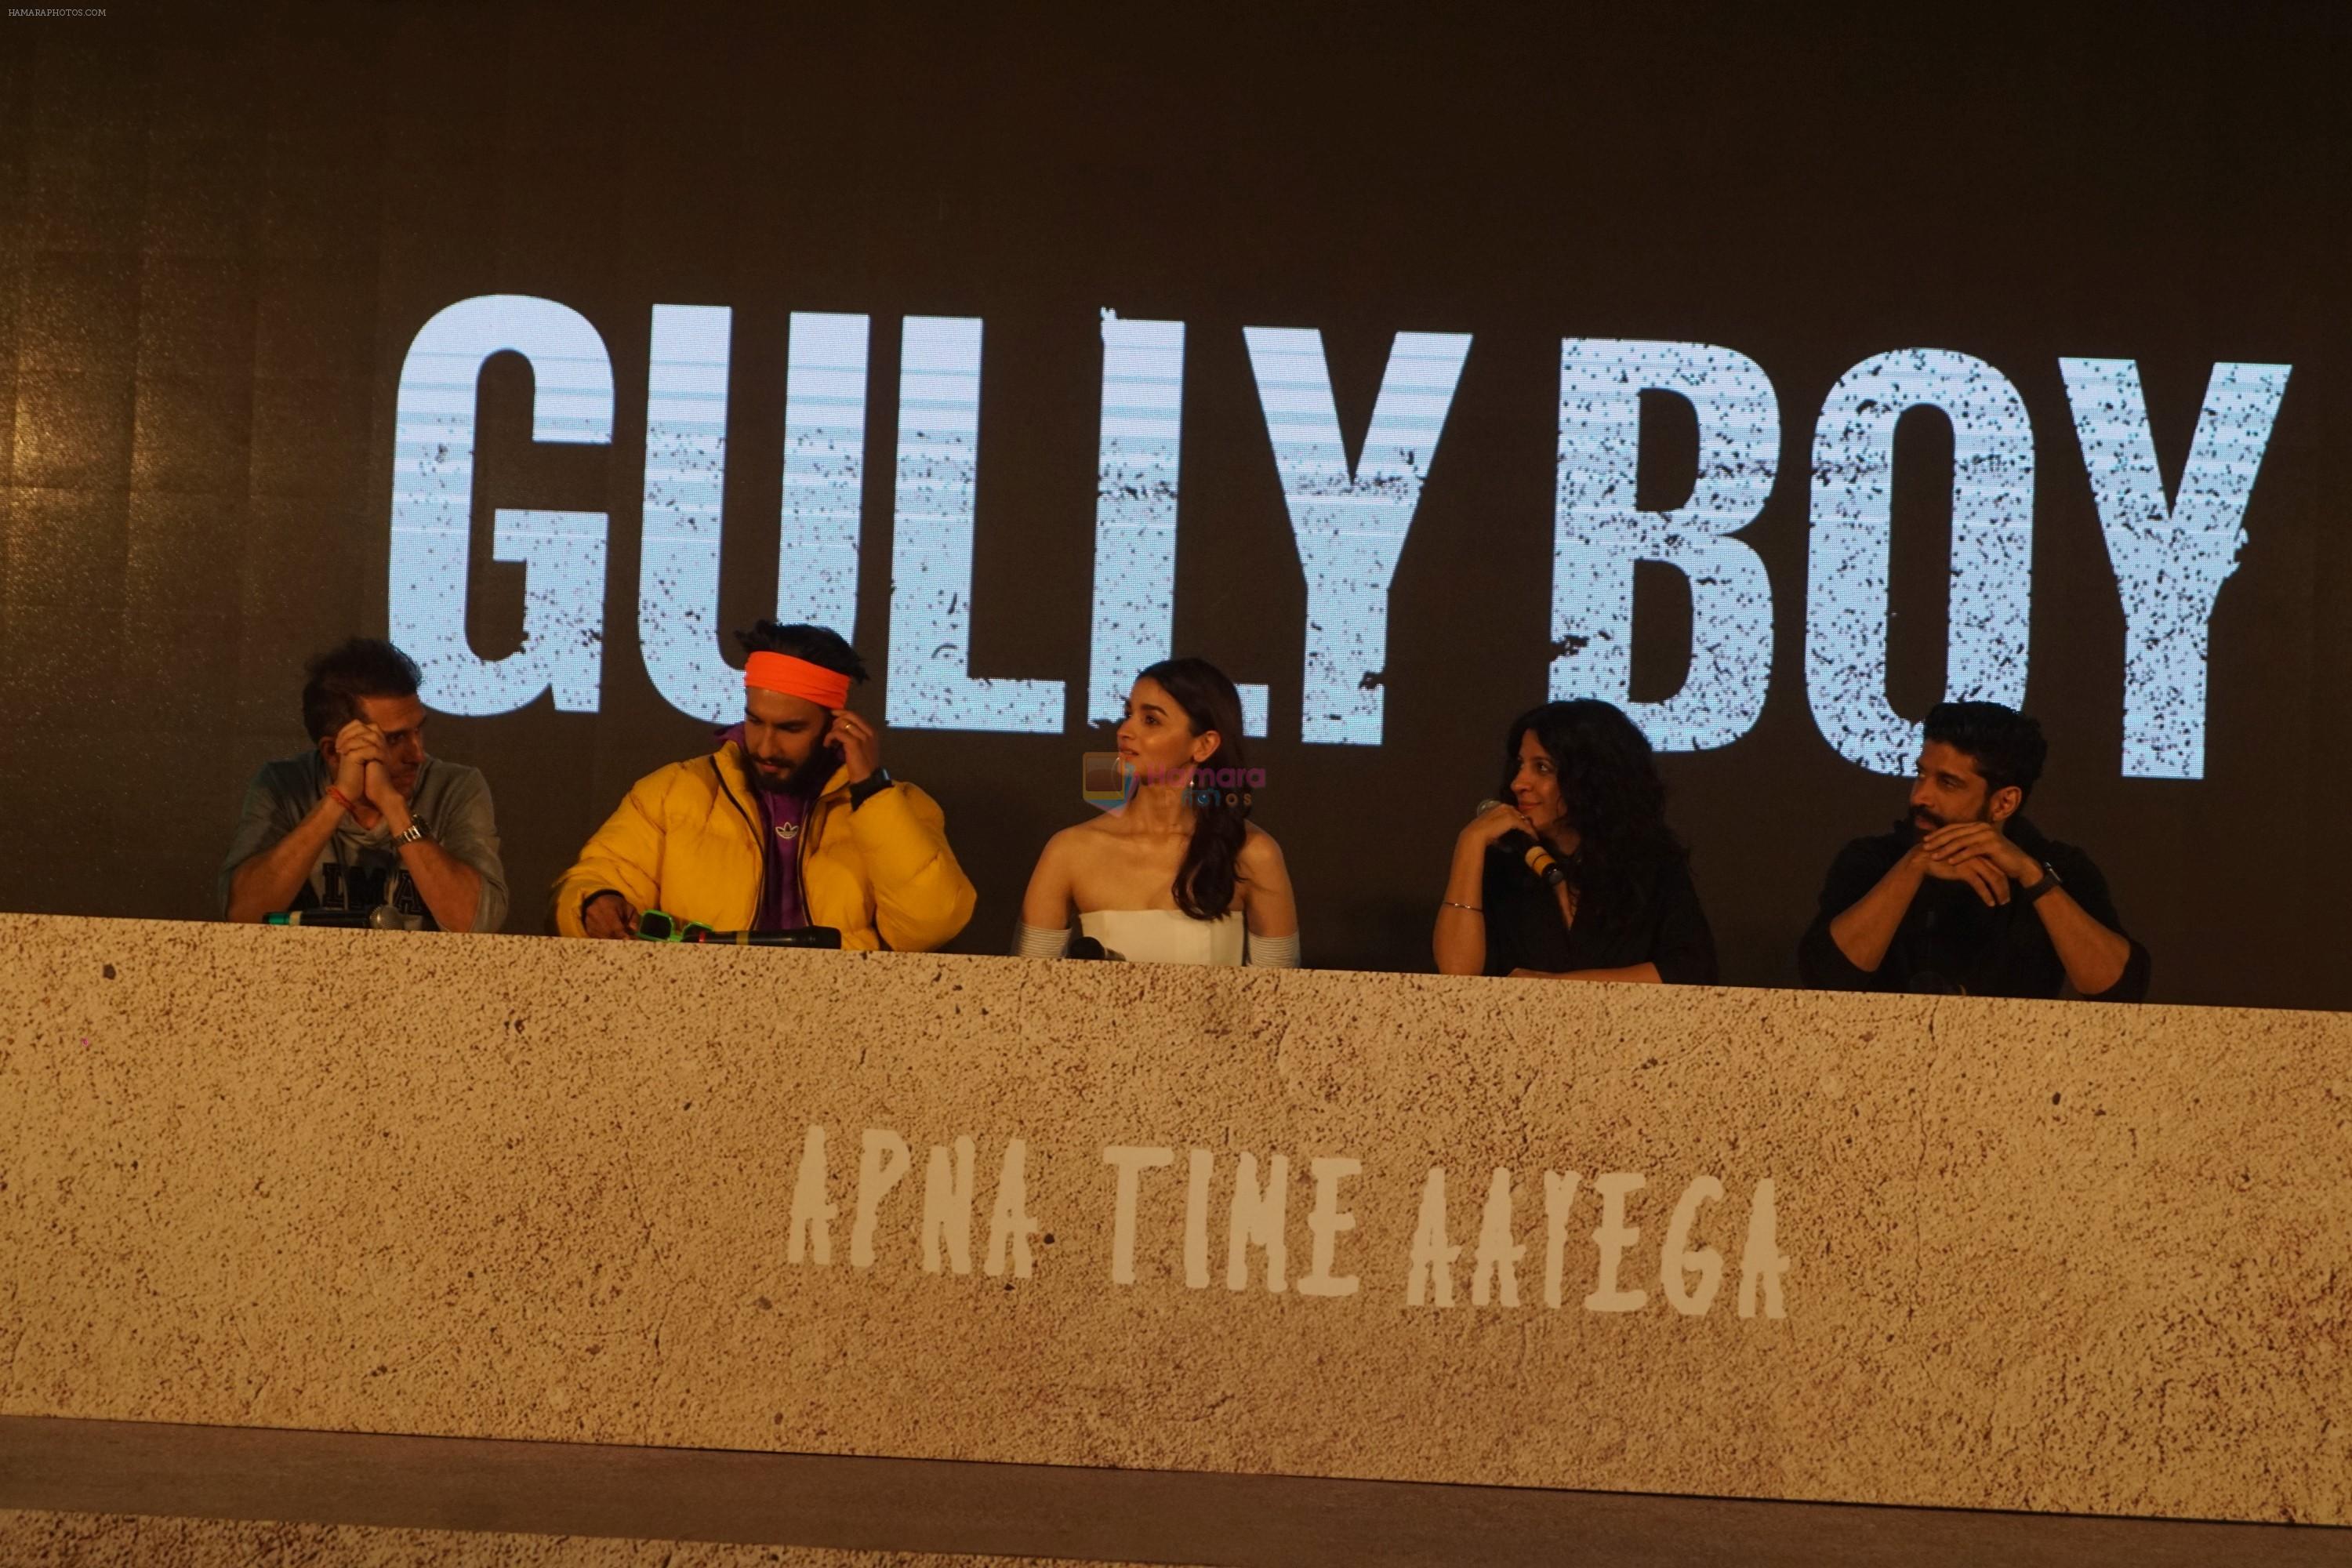 Ranveer Singh, Alia Bhatt at the trailer launch of film Gully Boy on 8th Jan 2019